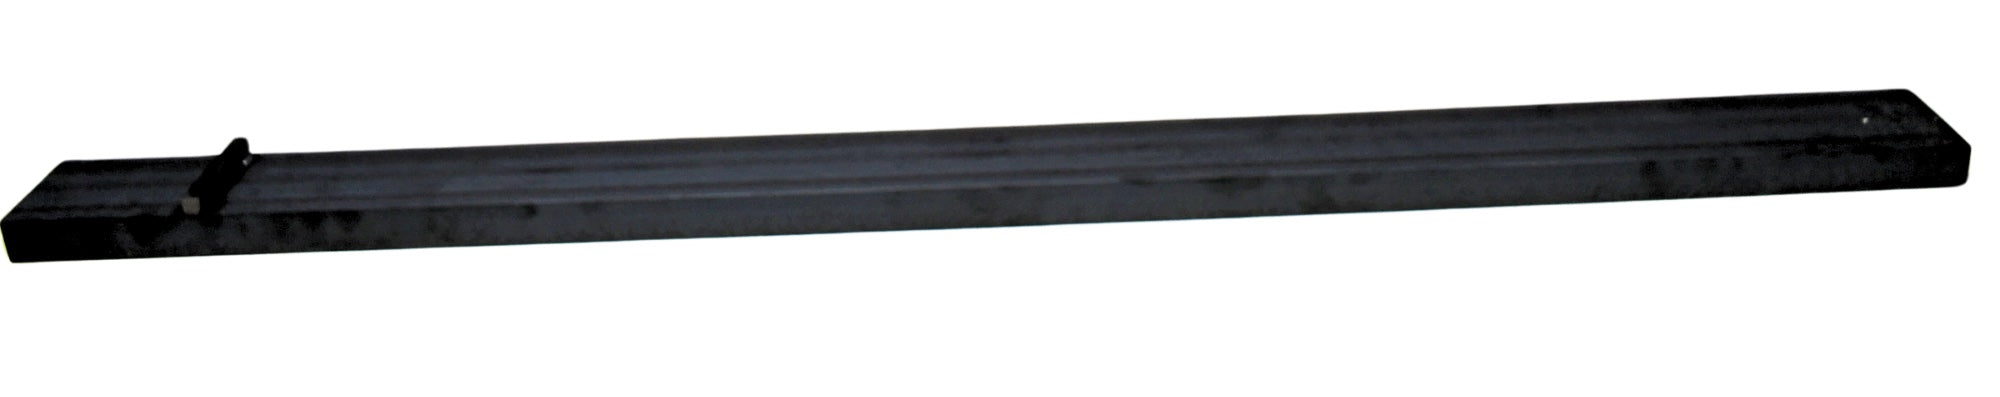 4' Pipe Stake-Steel